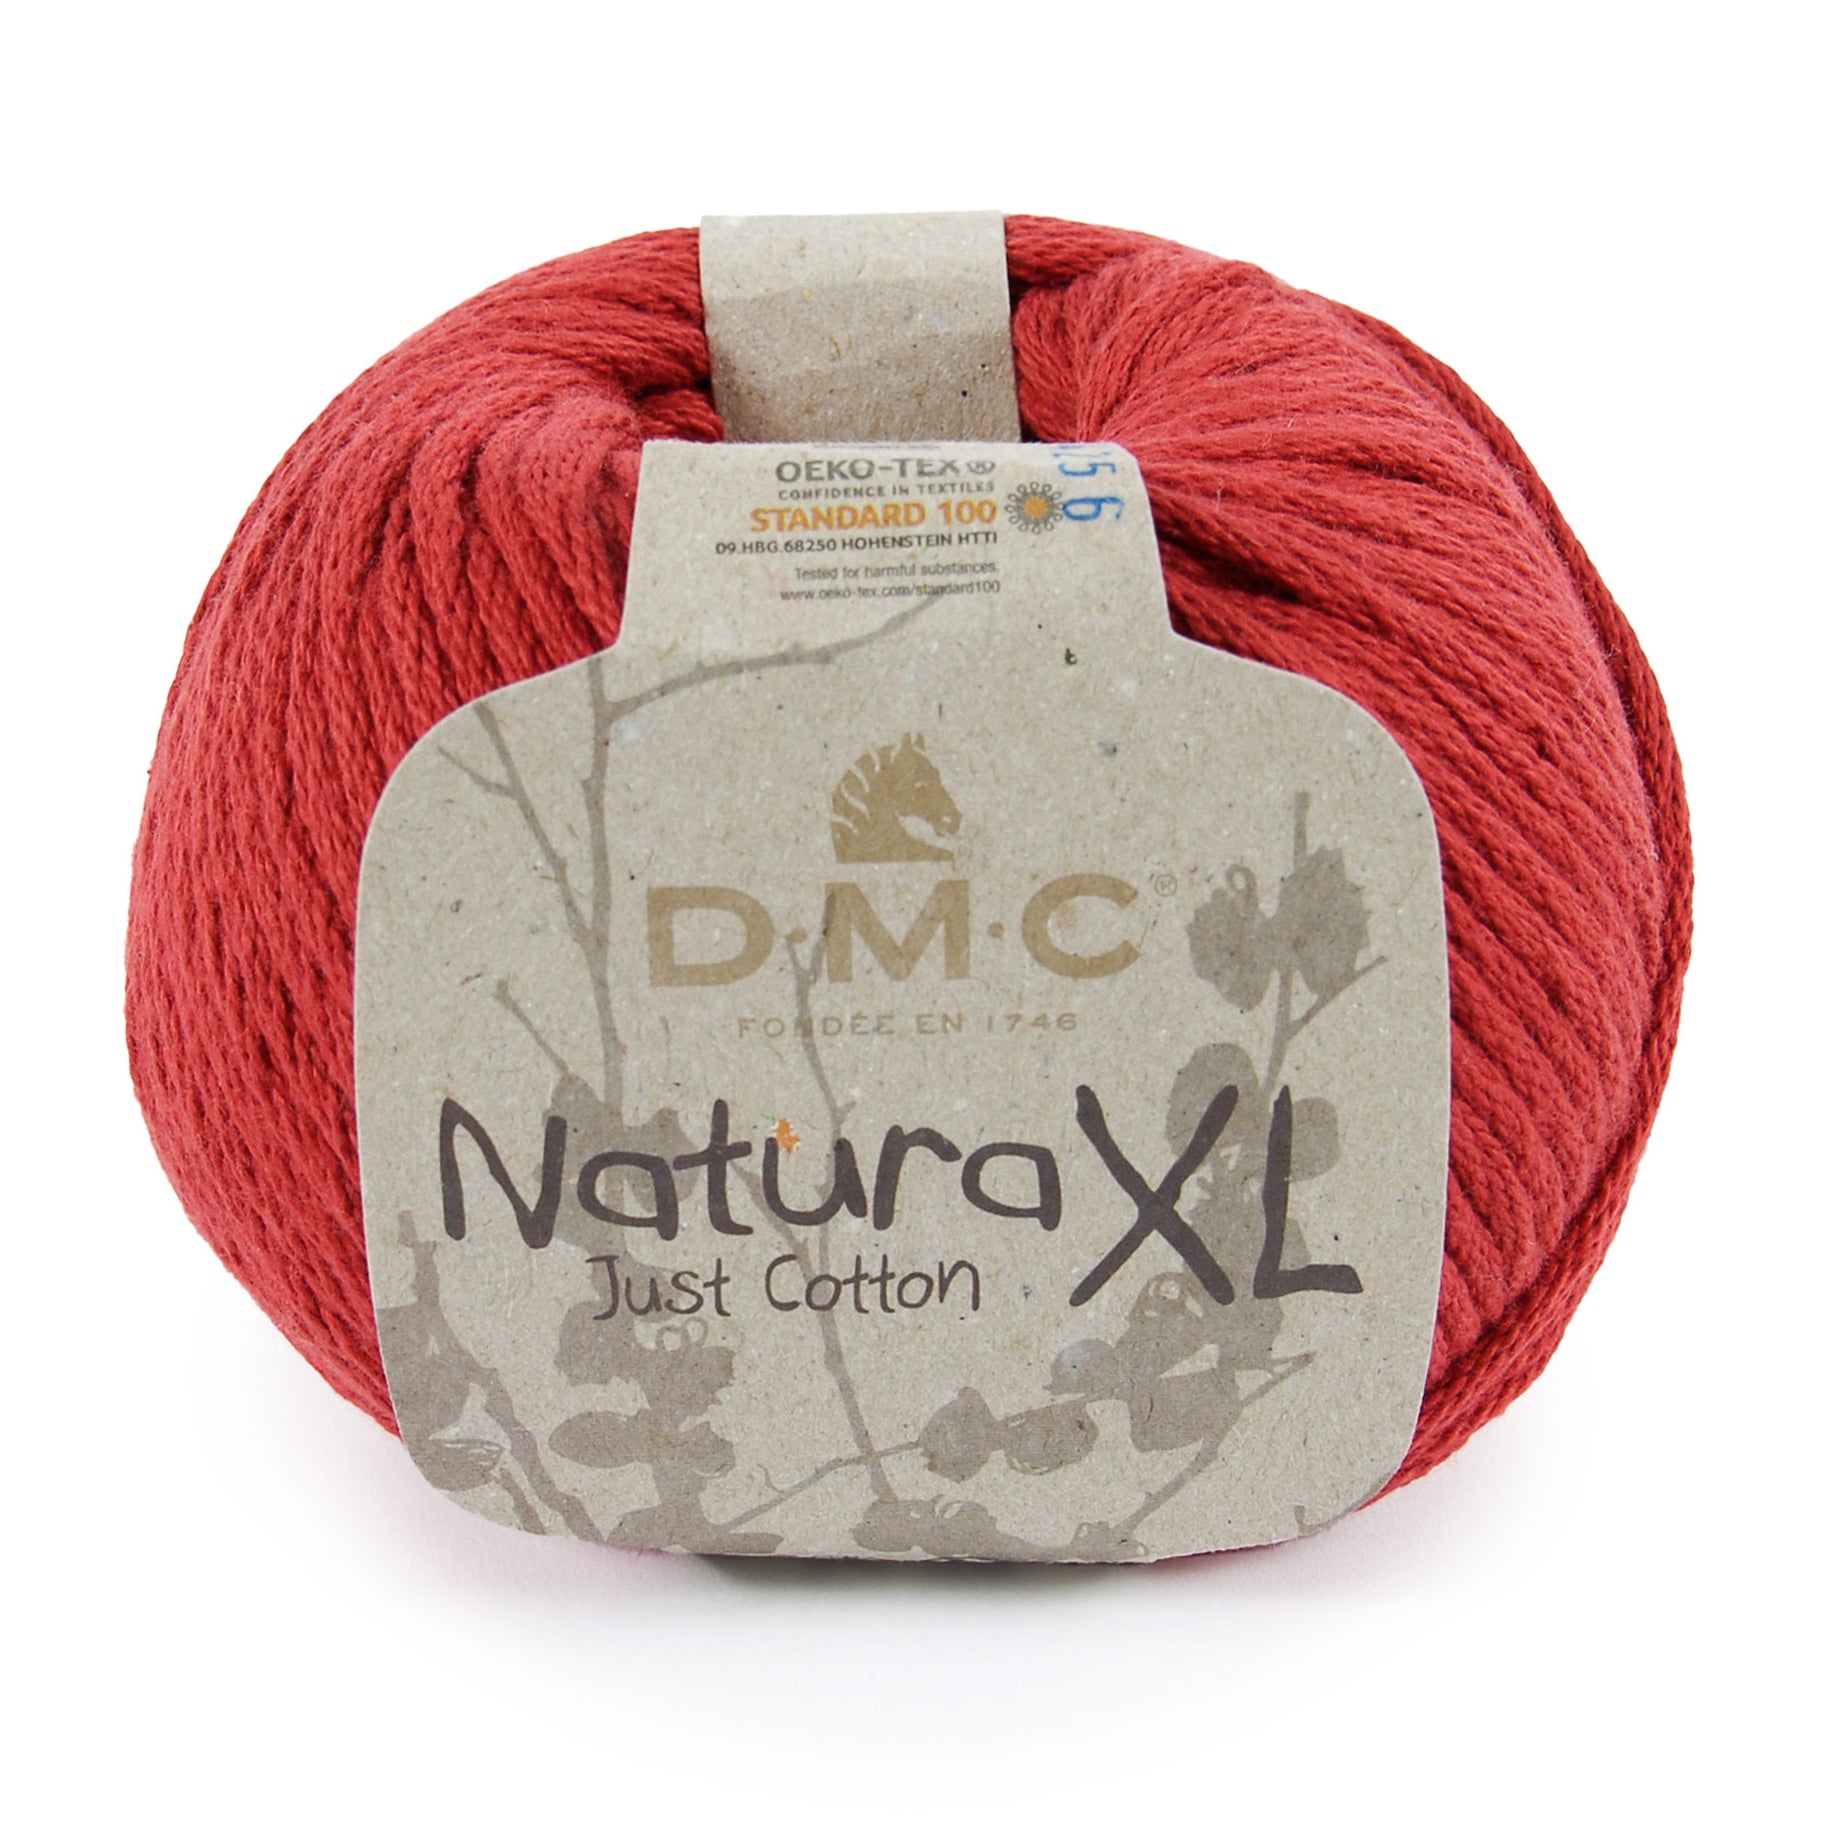 DMC Natura XL - The thick and elegant cotton yarn